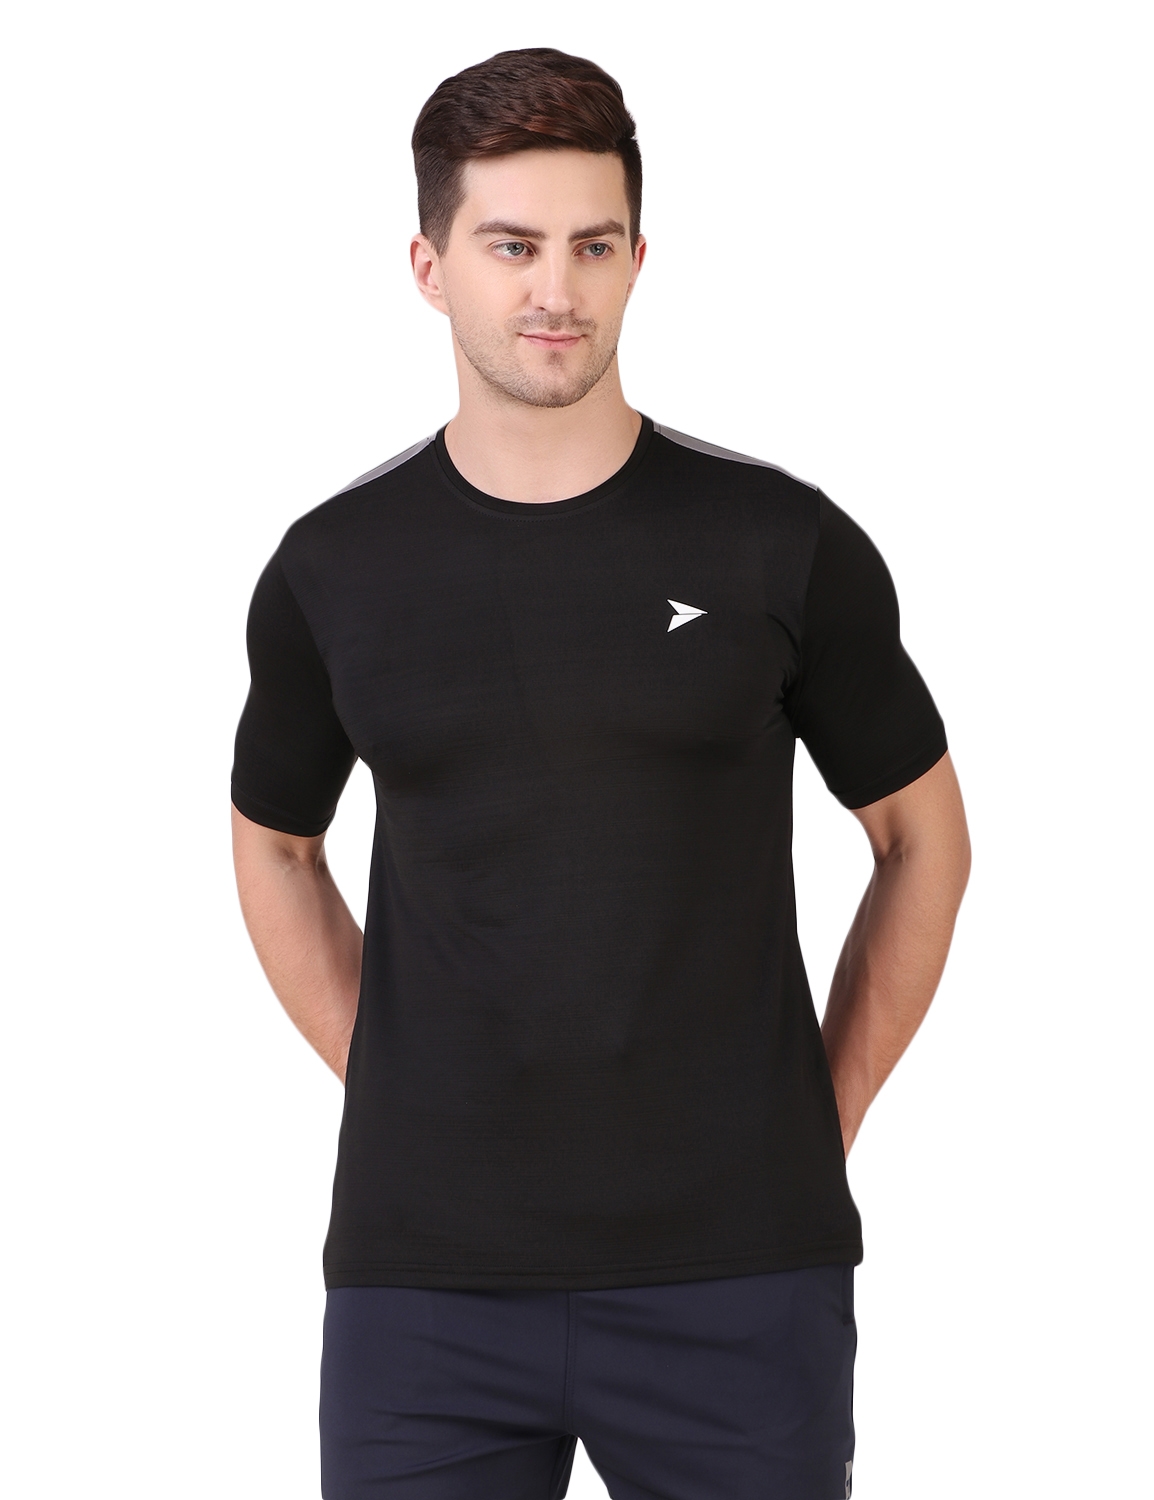 Fitinc | Fitinc Men's Round Neck Slimfit Gym & Active Sports Black T-Shirt